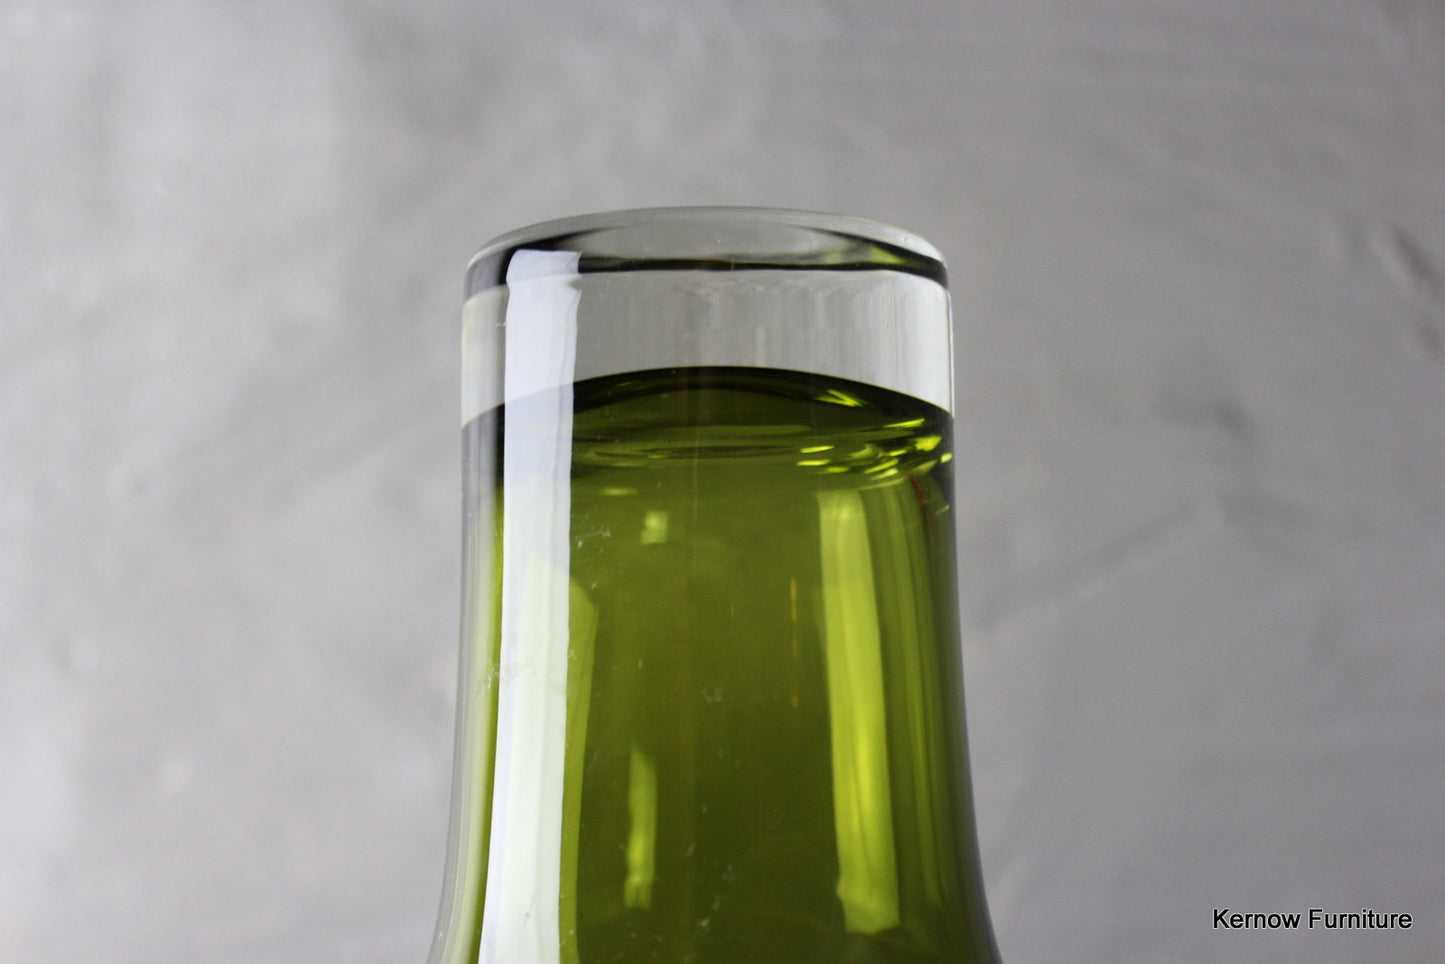 Riihimaki Green Glass Vase - Kernow Furniture